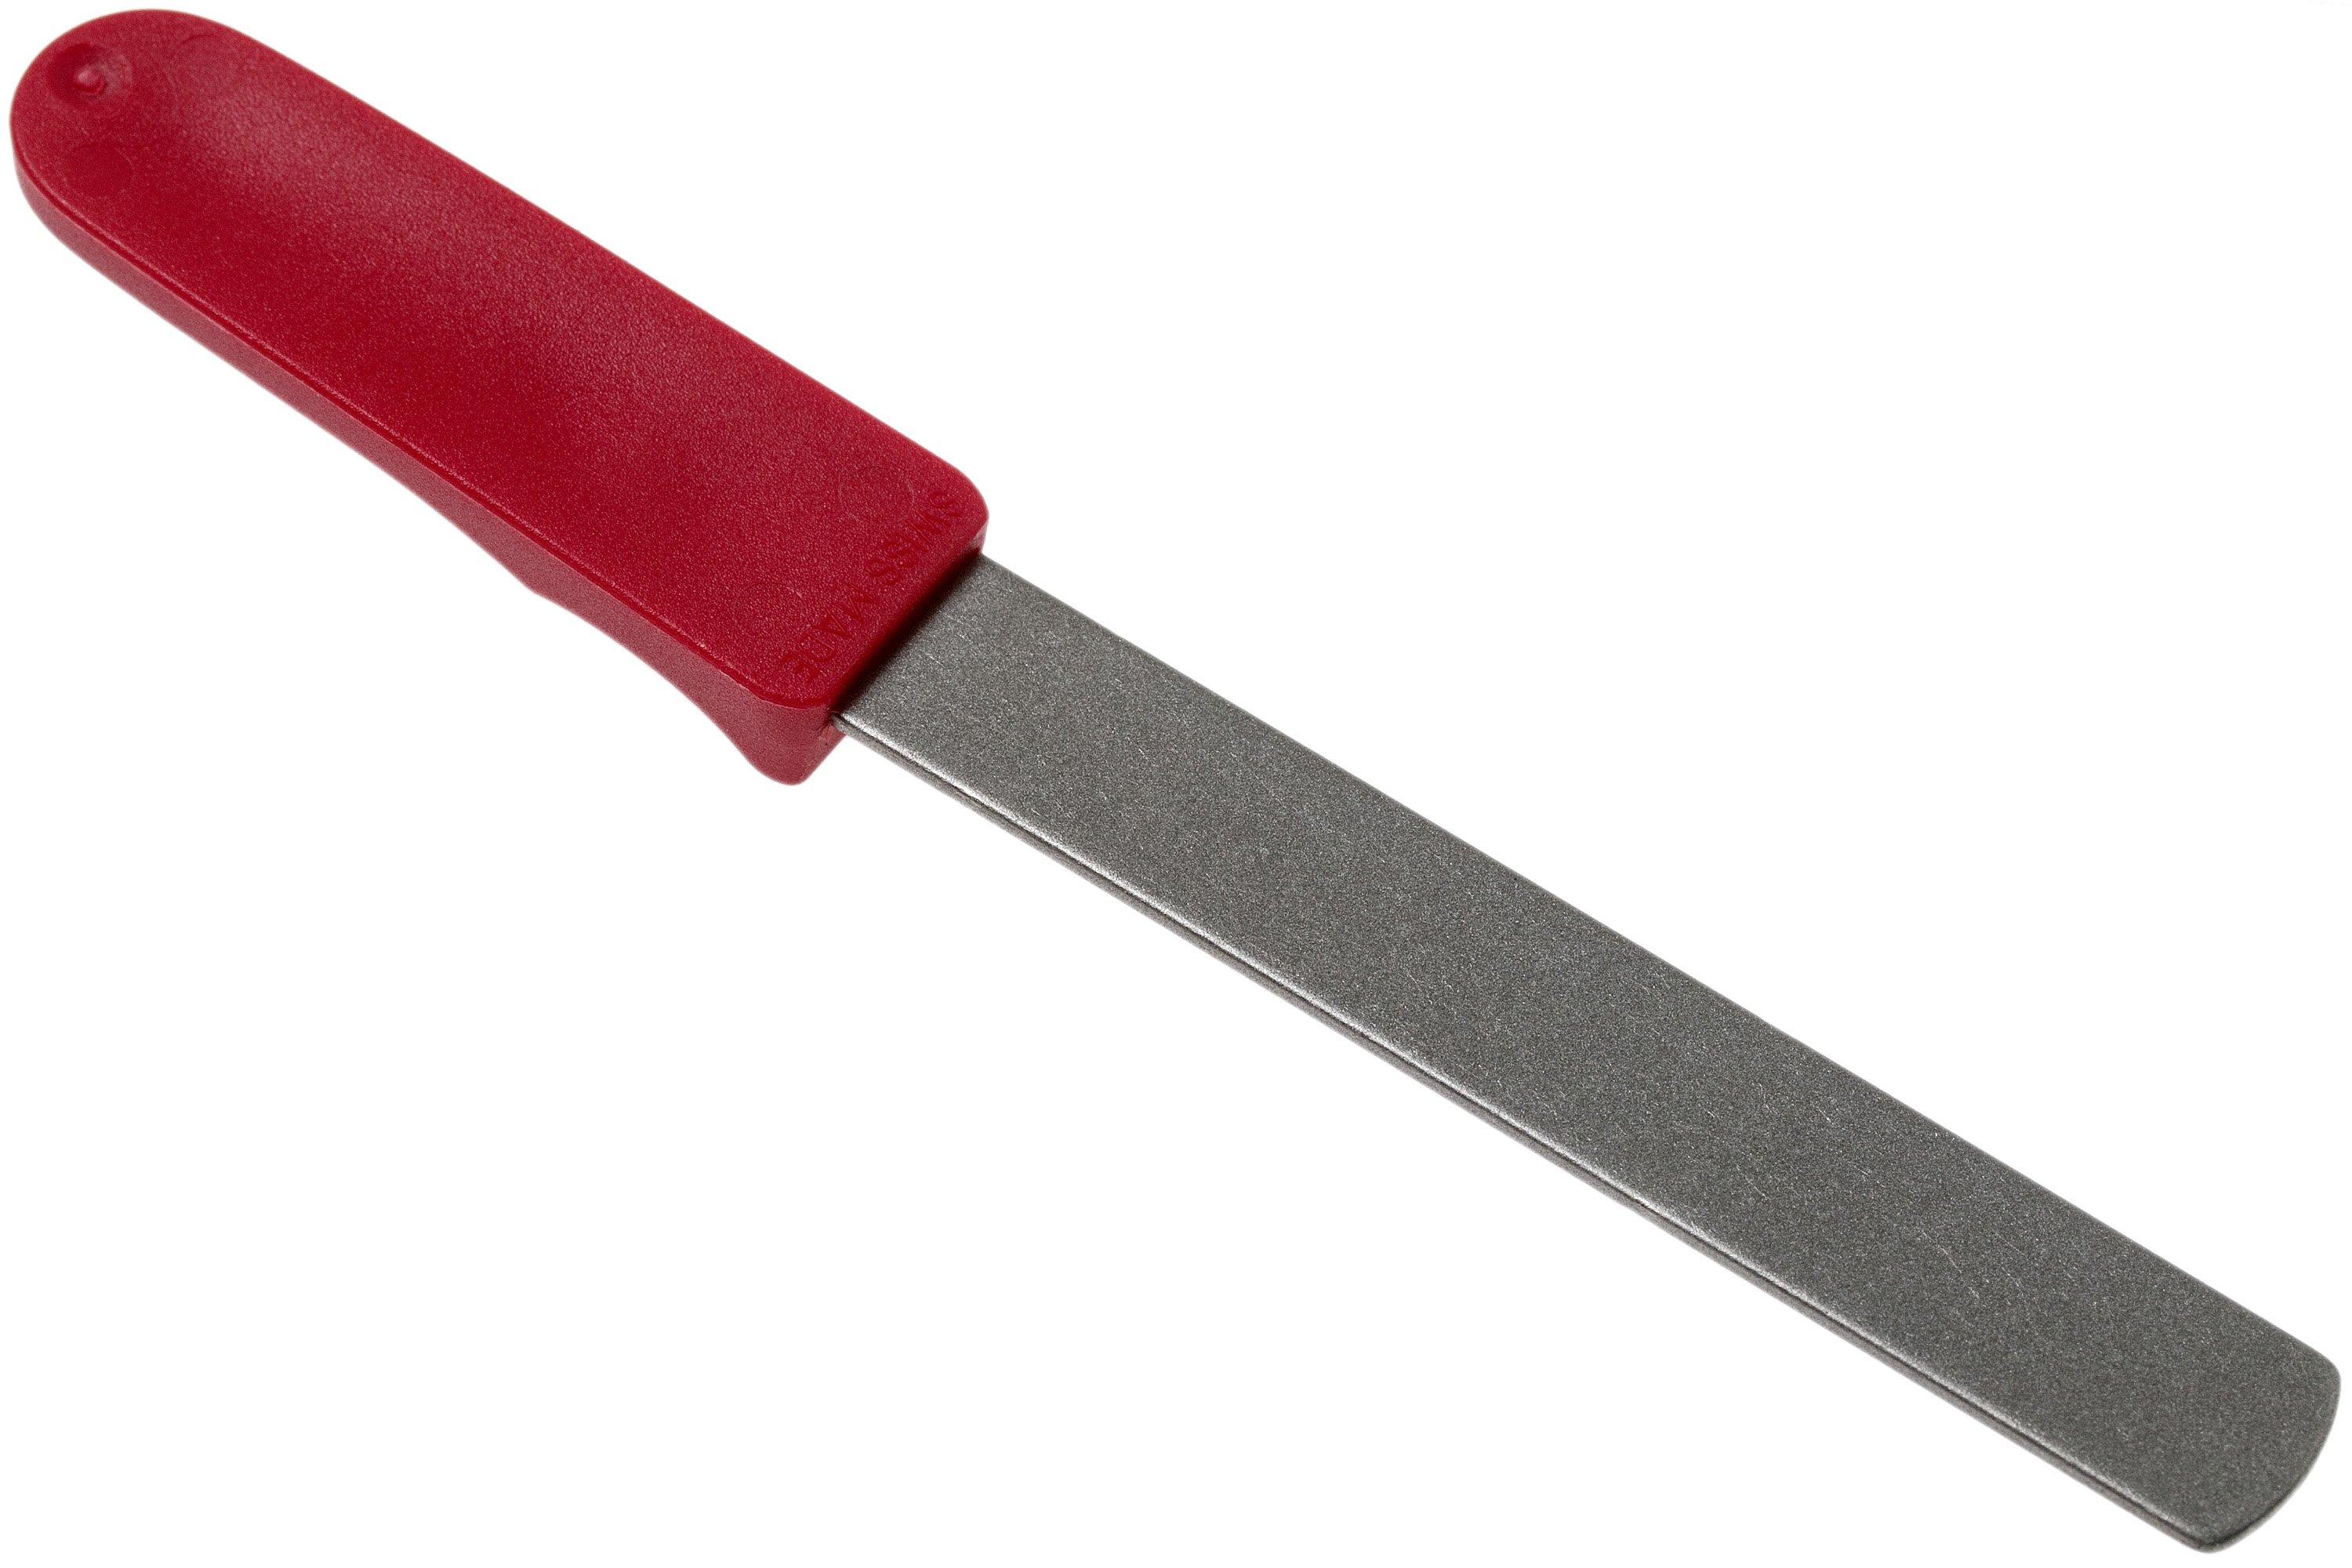 Review: Victorinox Dual Knife Sharpener